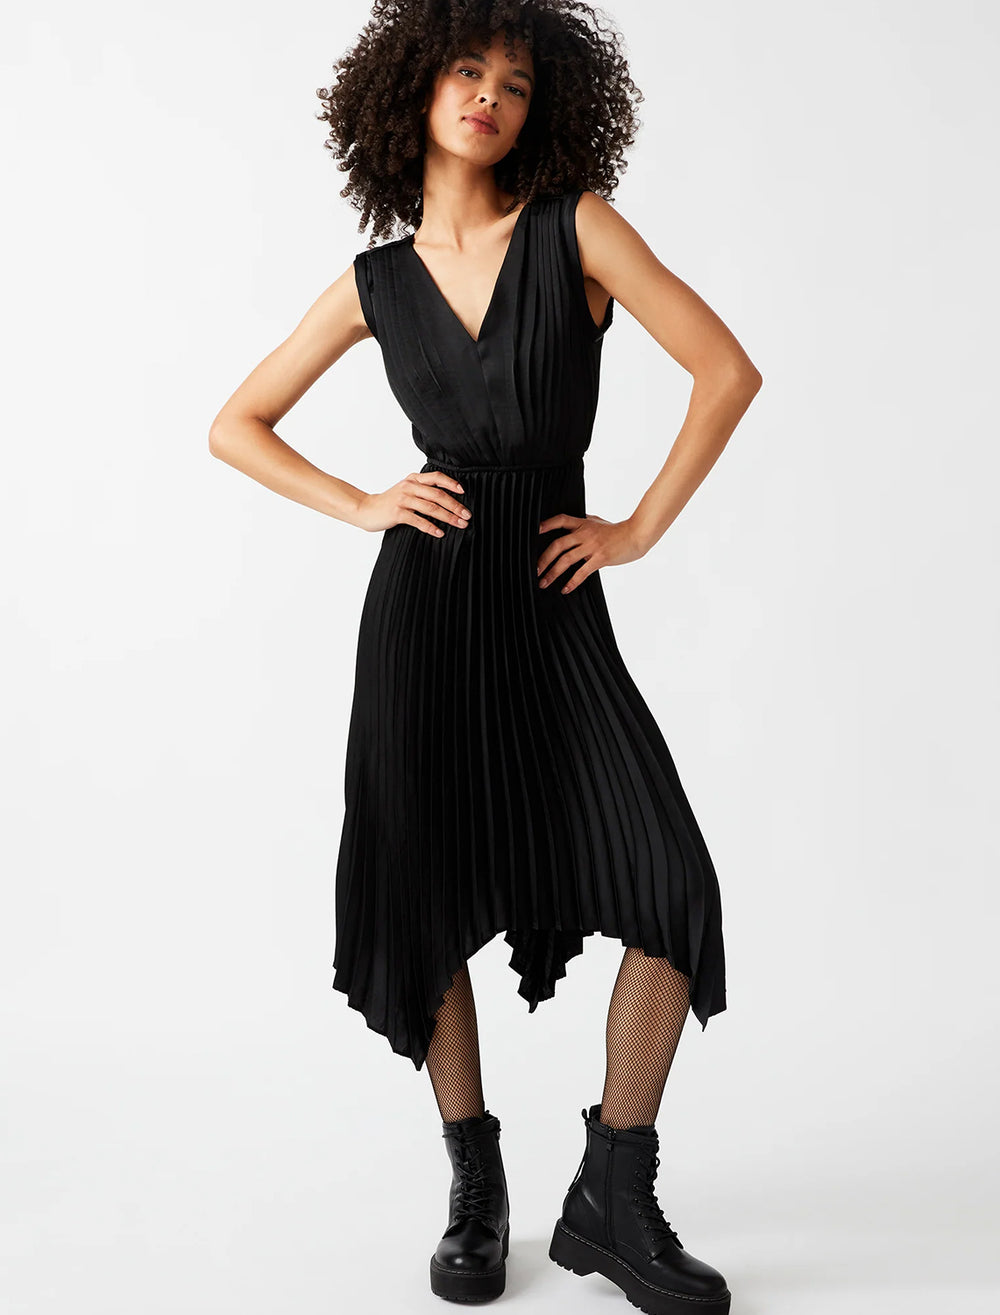 Model wearing Steve Madden's donna dress in black.